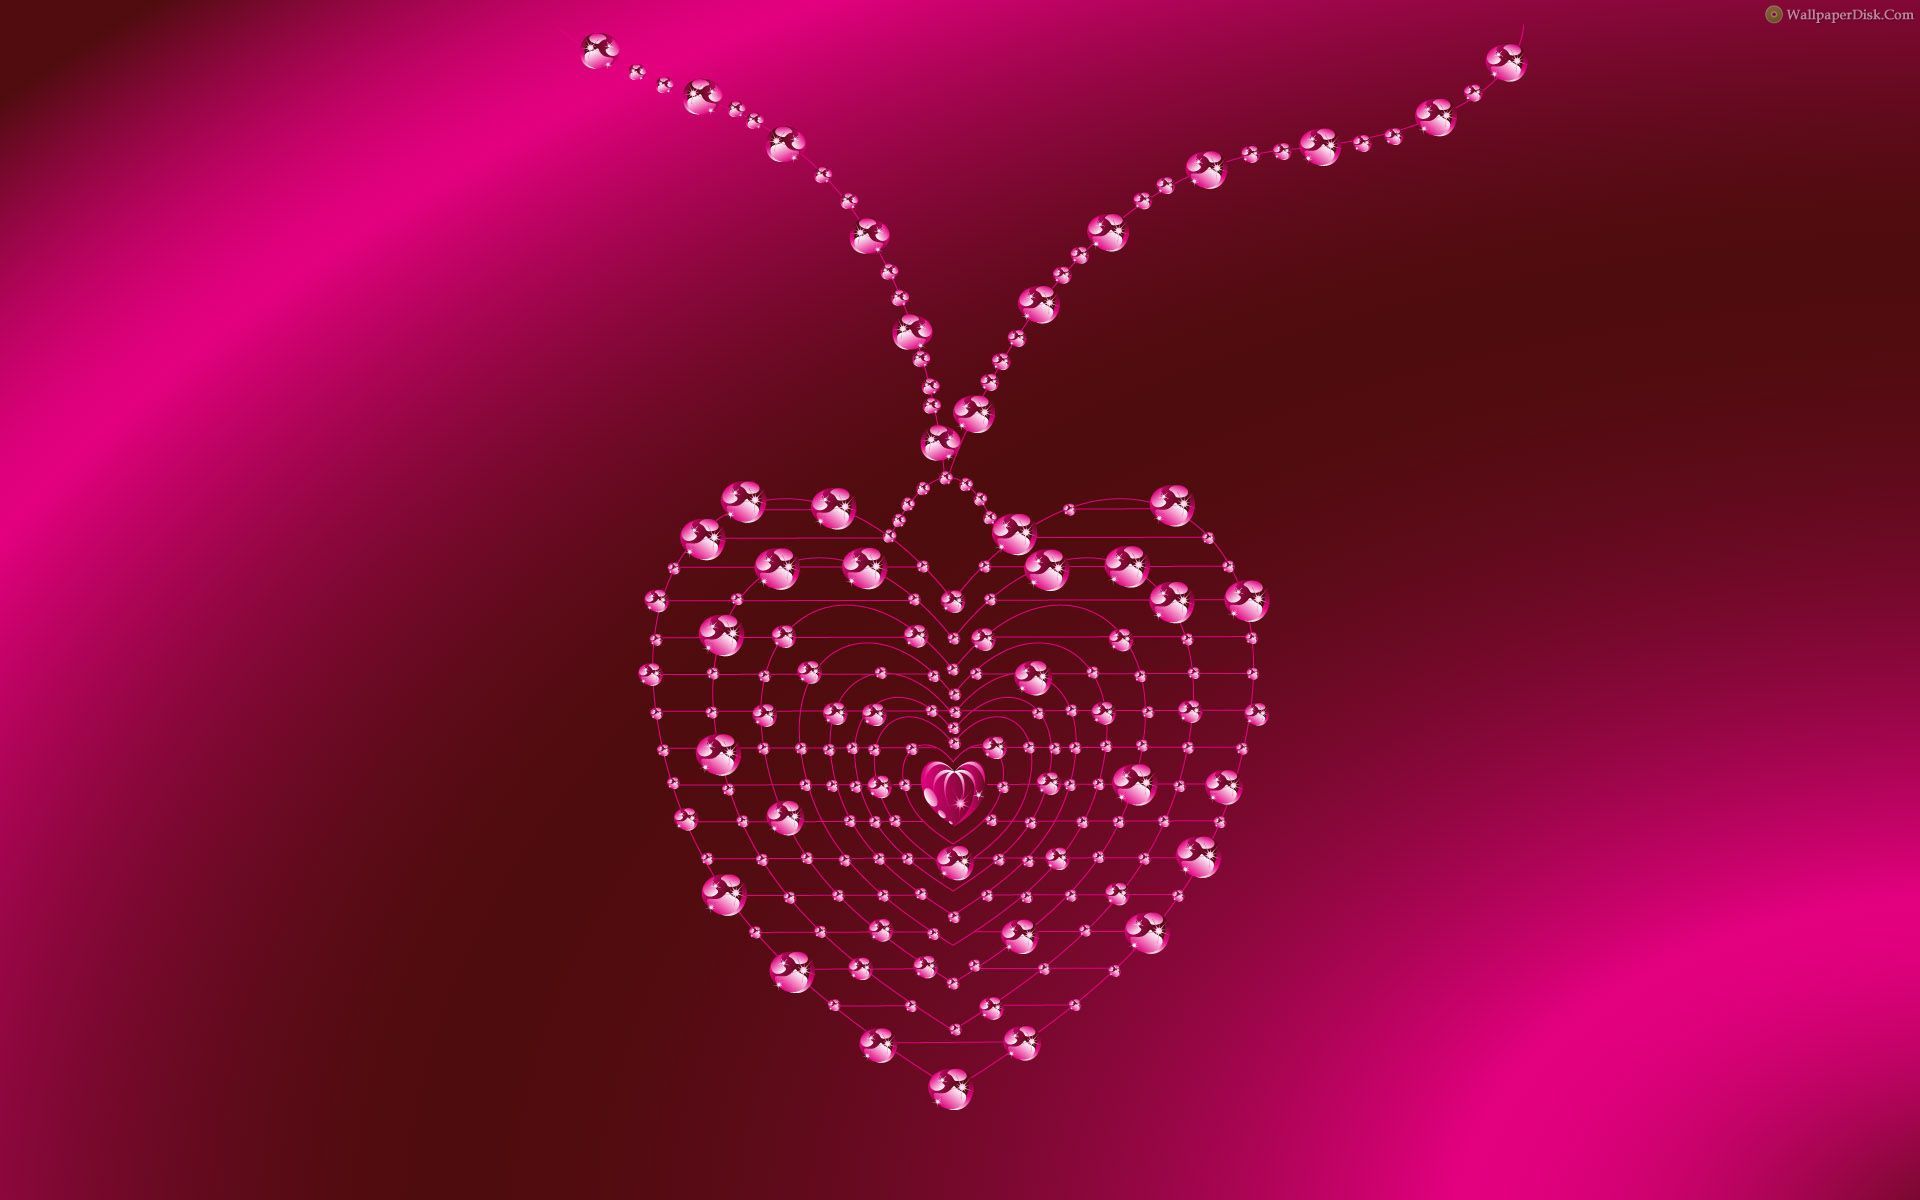 romance image love.. copy paste wallpaperdisk com wallpaper love and romance love. Heart wallpaper, Heart decorations, Love heart